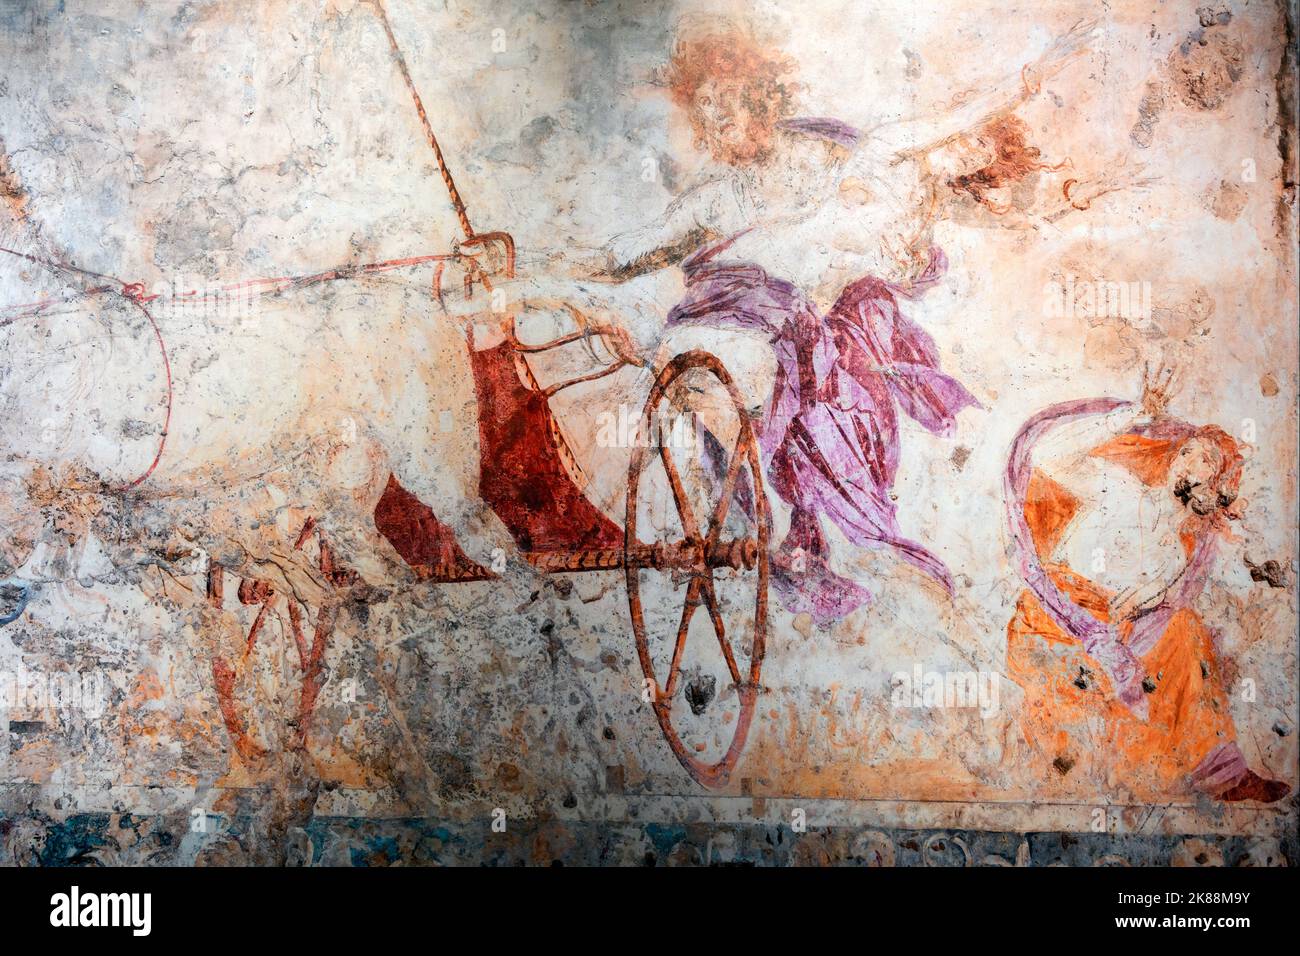 The Rape of Persephone, fresco from the Royal Tombs of Aigai, Vergina, Macedonia, Greece Stock Photo